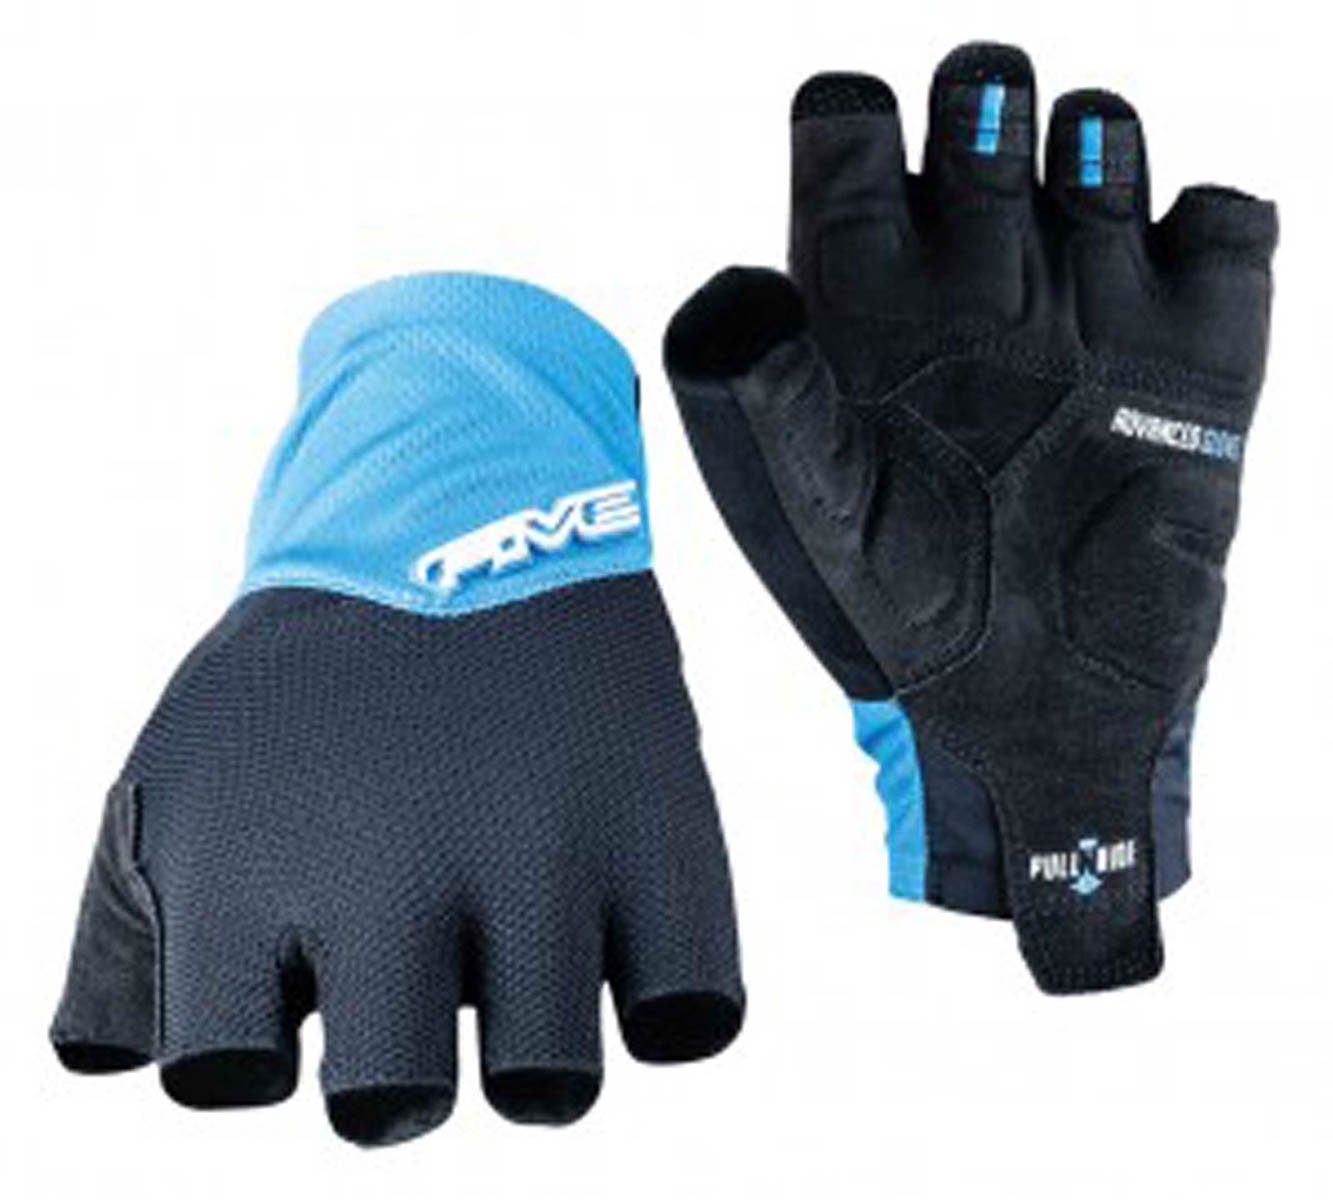 Five / Handschuh Fahrradhandschuhe RC1 XL Gr. Gloves Shorty PRO Herren,